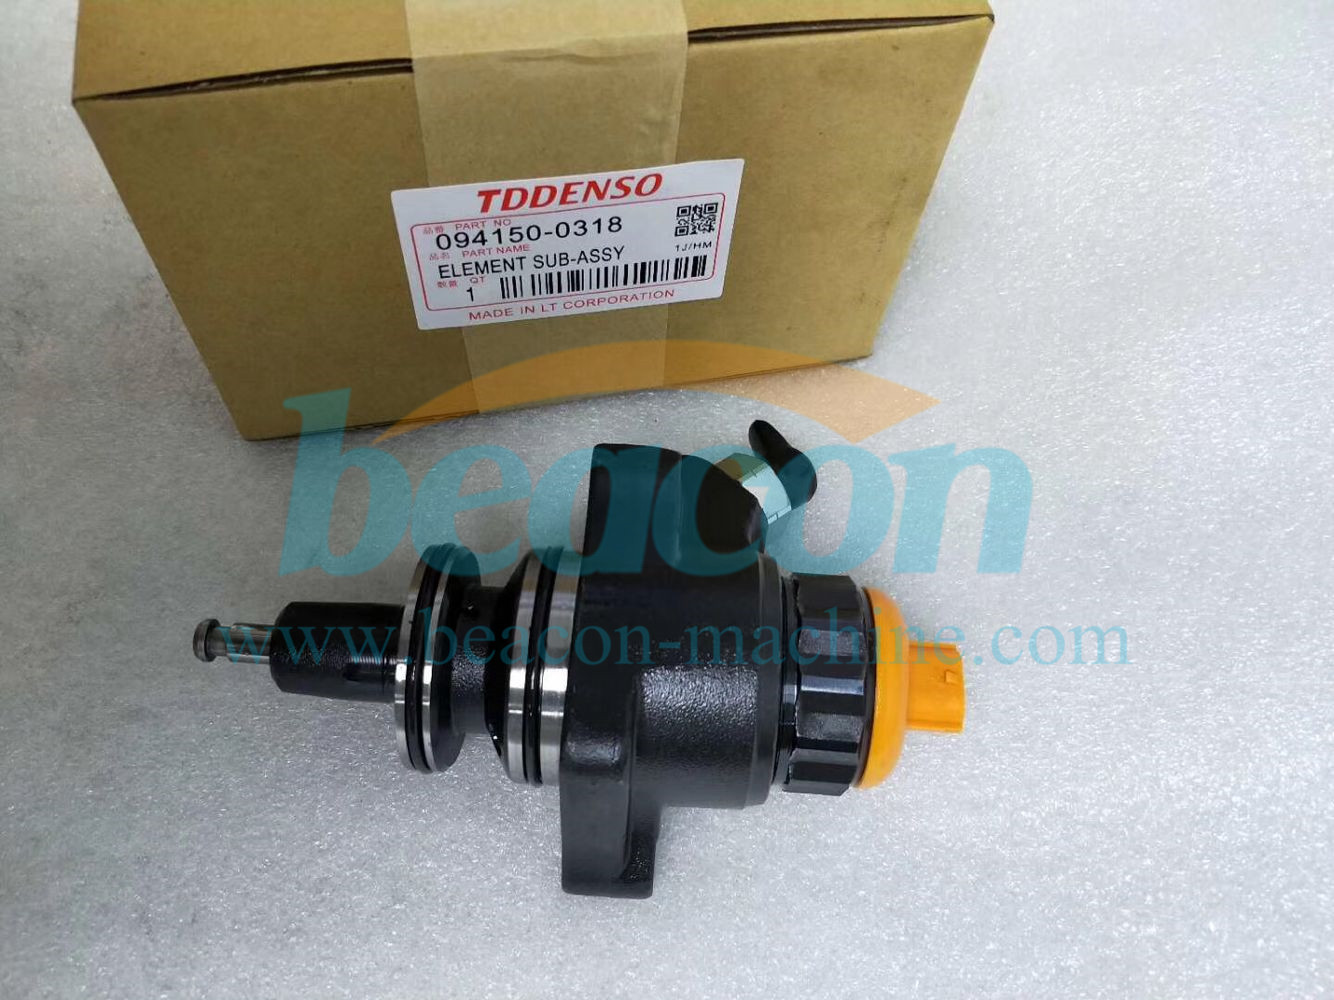 094150-0318 high pressure injector pump plunger